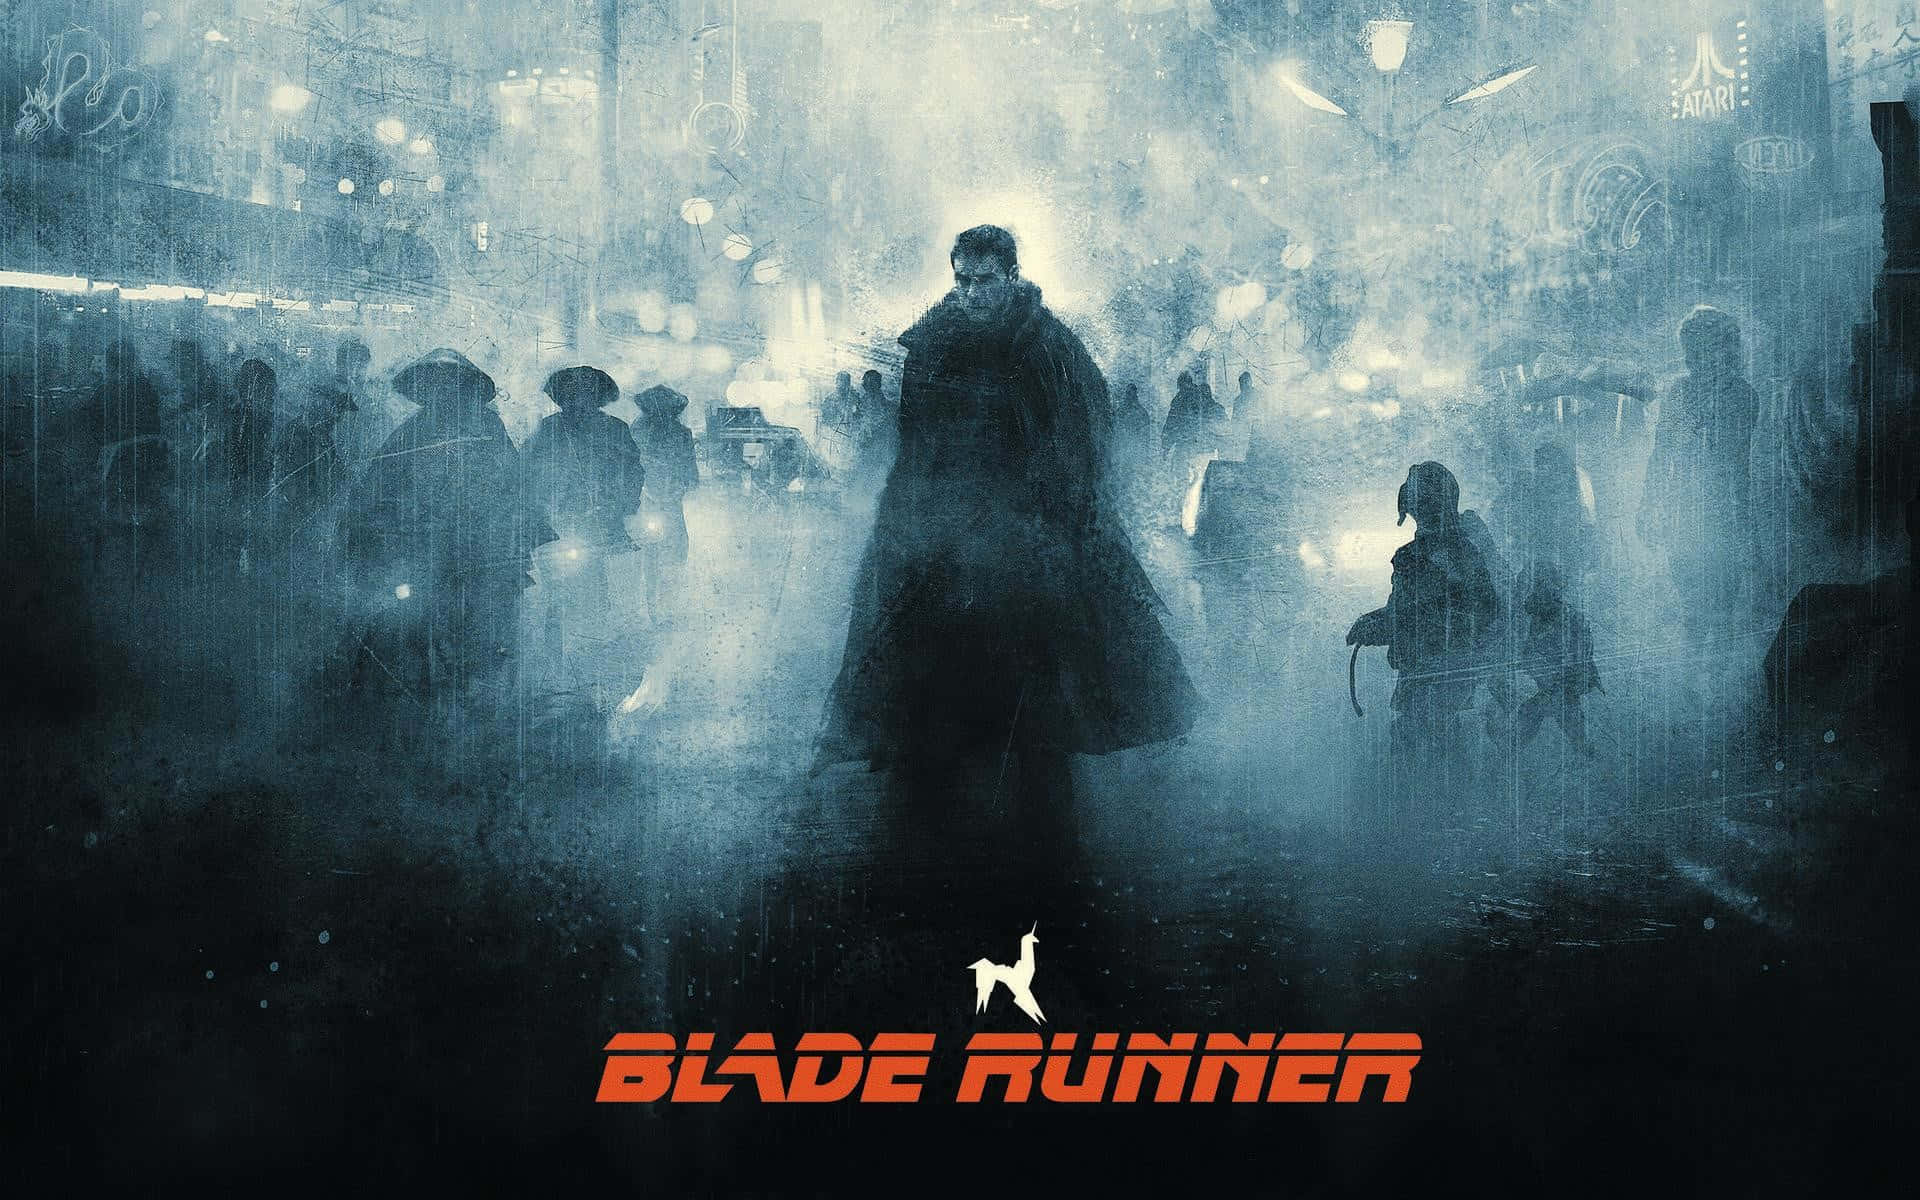 Etklassisk Billede Fra Den Kultklassificerede Film Blade Runner Fra 1982.